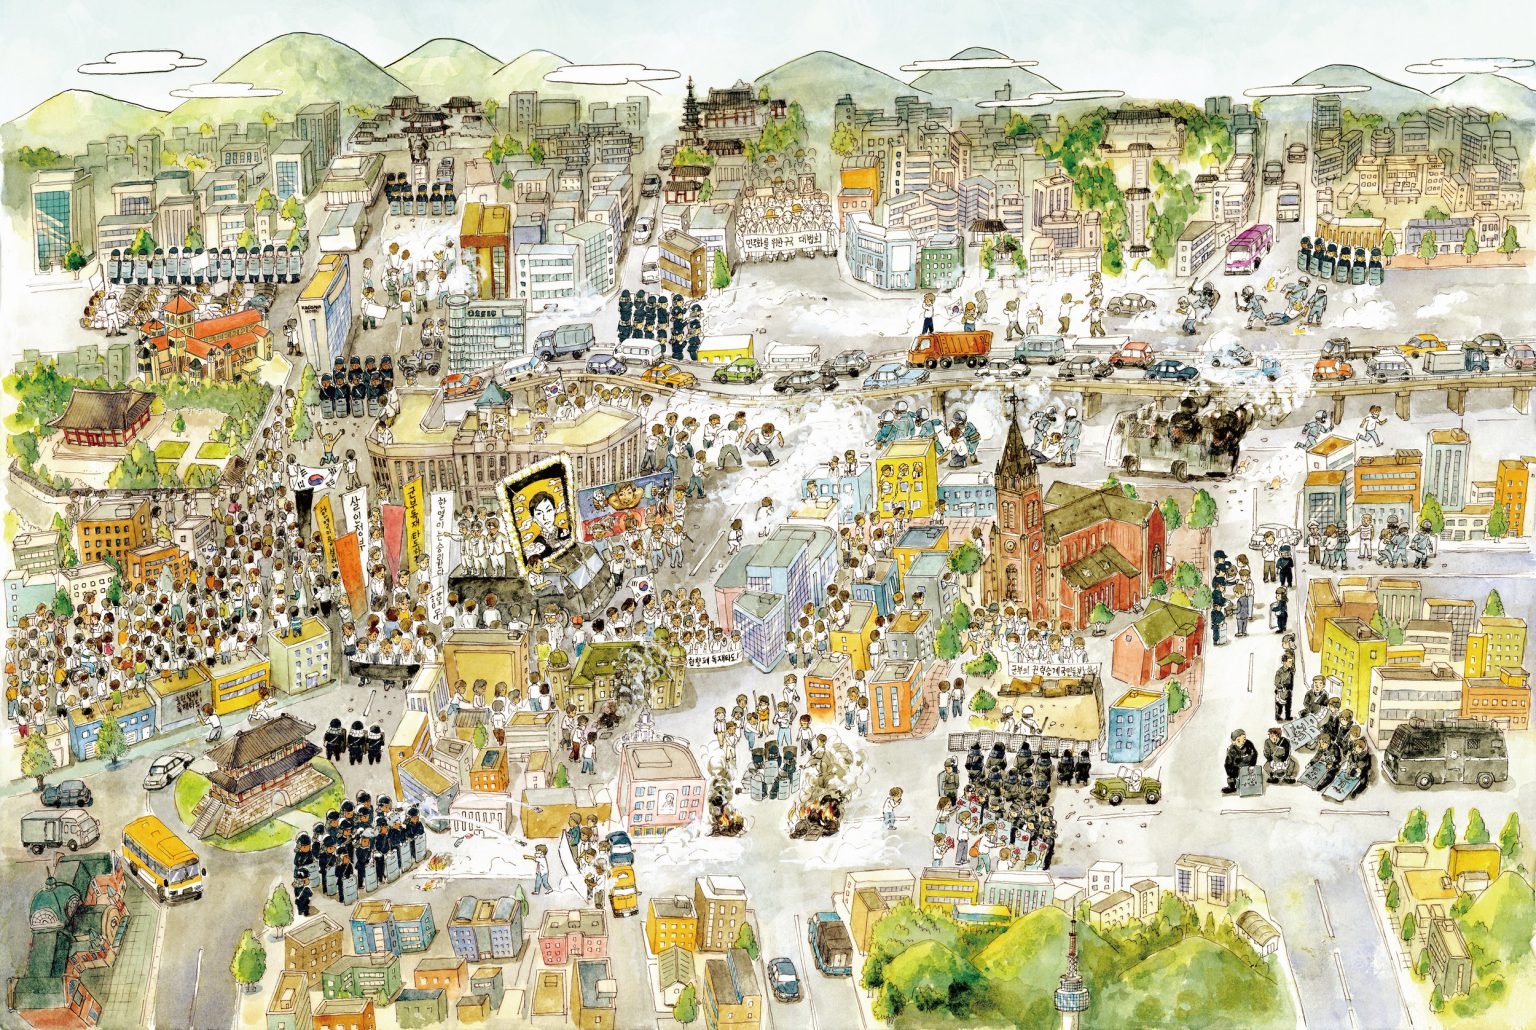 Drawing of The Jun 10 Uprising in Seoul